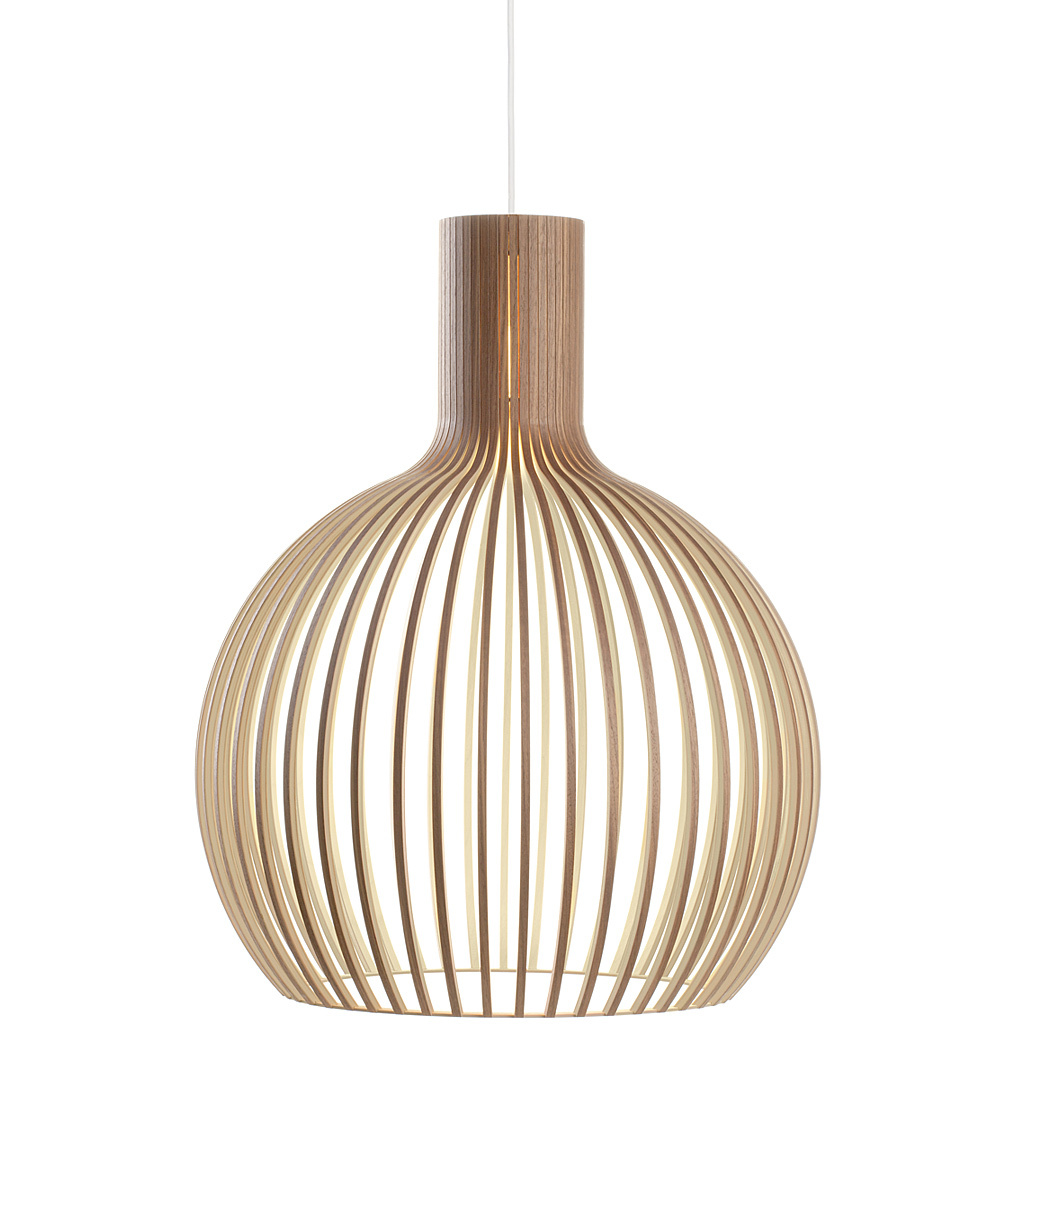 Octo 4240 pendant lamp is available in walnut veneer